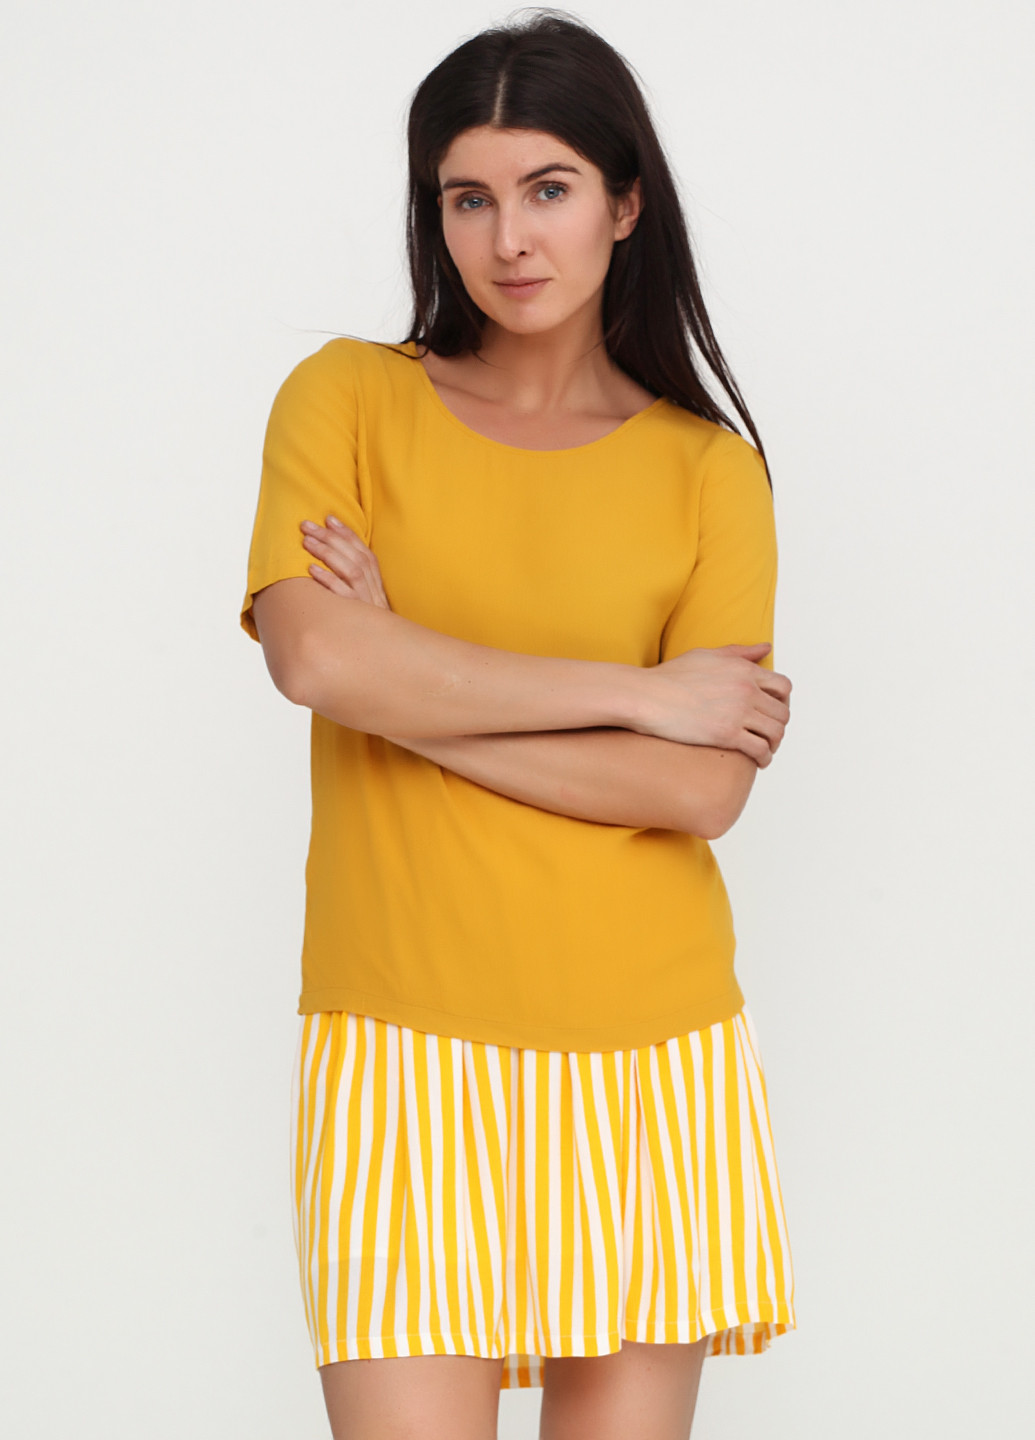 Жовта літня блуза Minimum